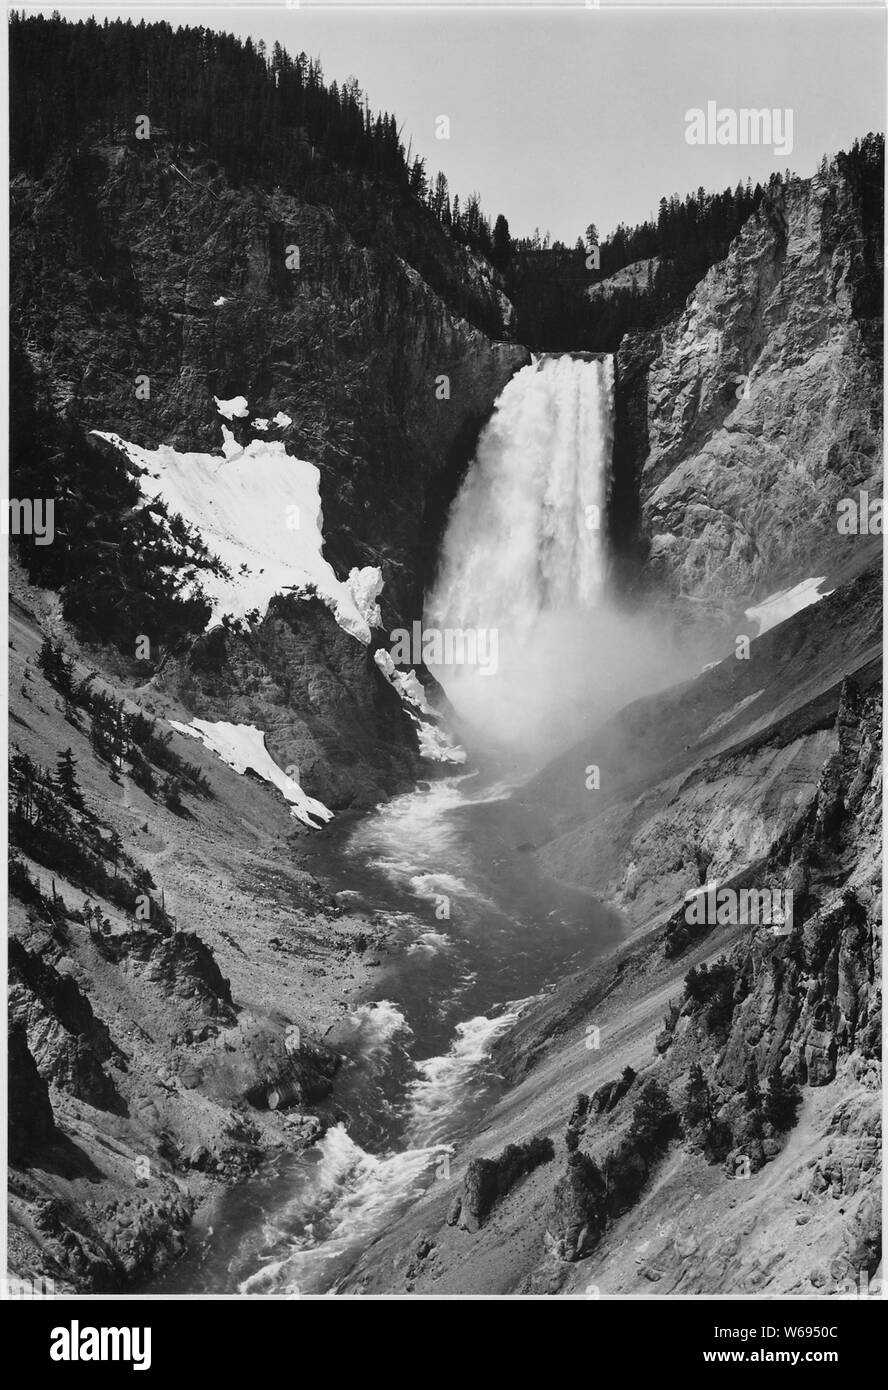 Chutes de Yellowstone, le Parc National de Yellowstone, Wyoming. (Orientation verticale), 1933 - 1942 Banque D'Images